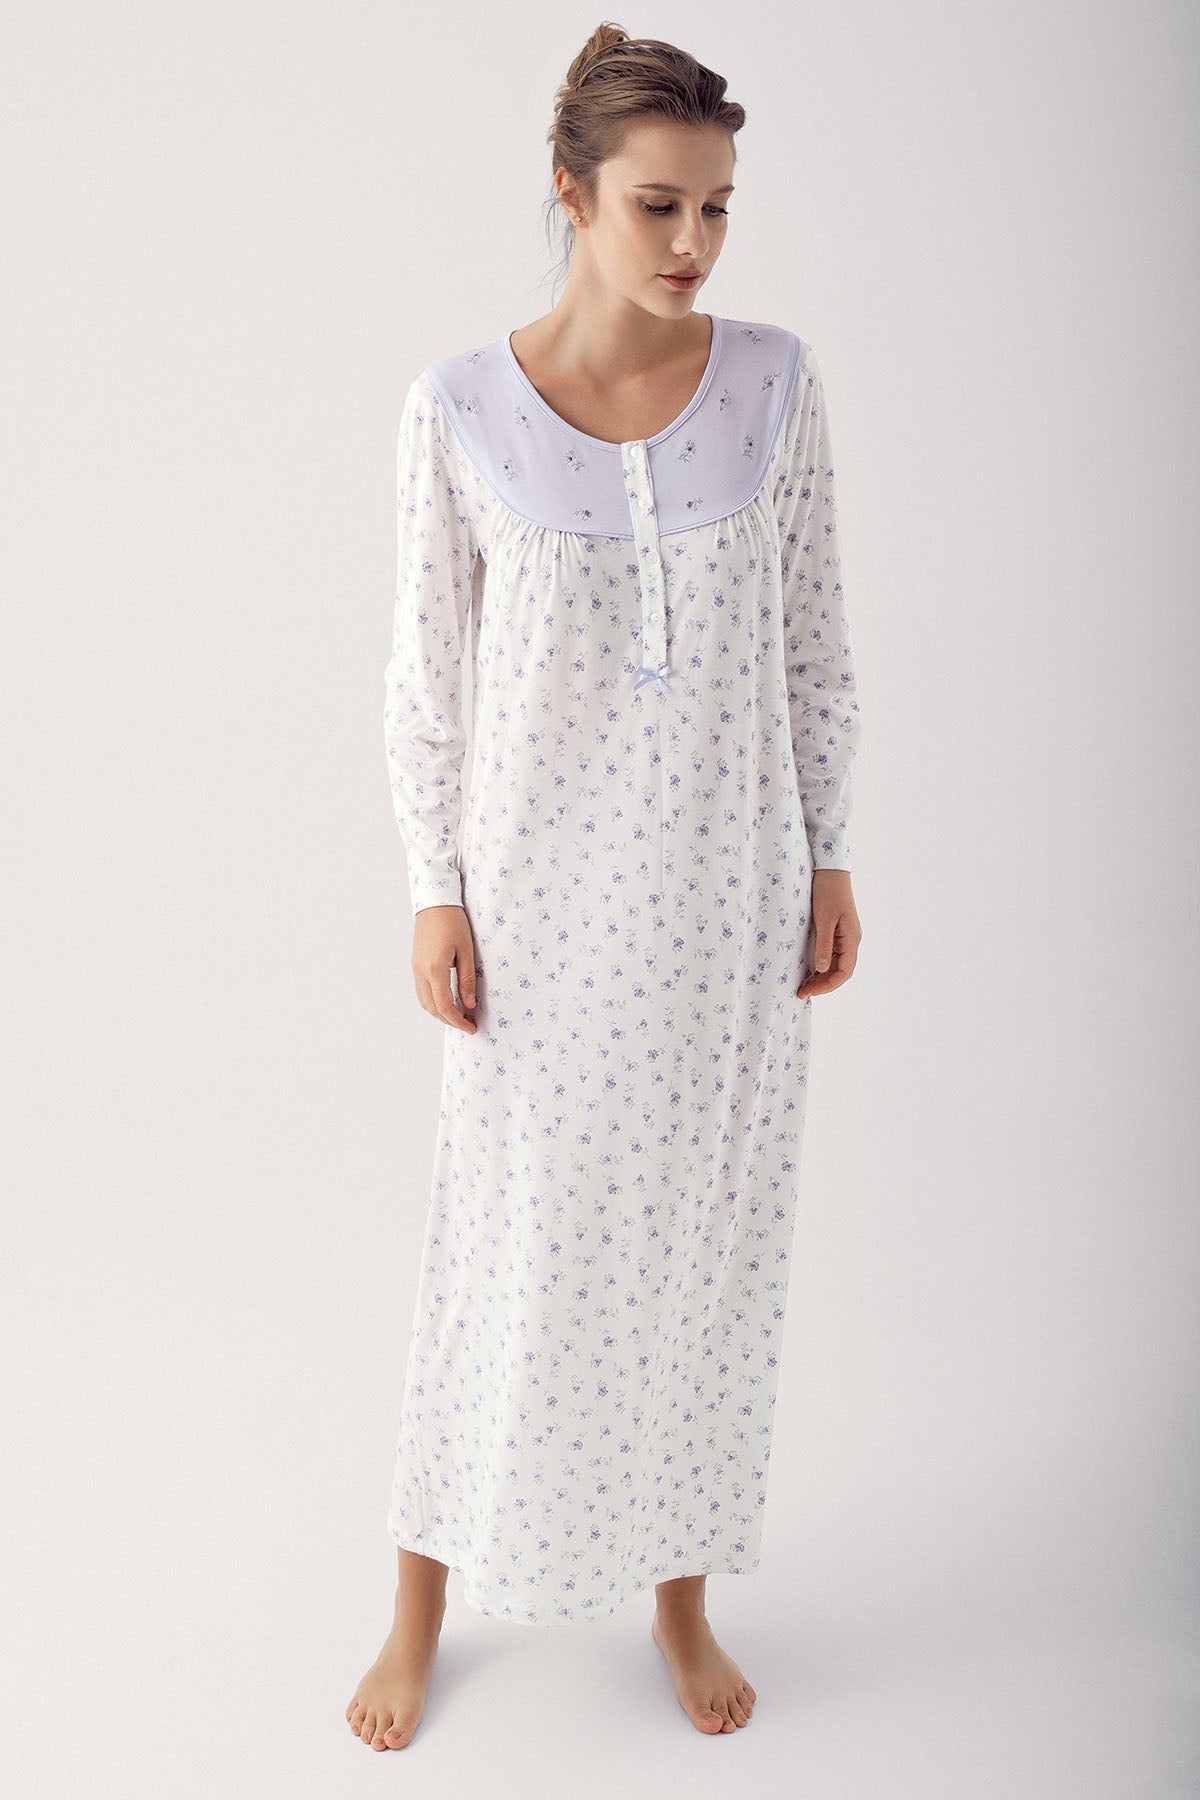 Shopymommy 14111 Flower Pattern Plus Size Maternity & Nursing Nightgown Lilac